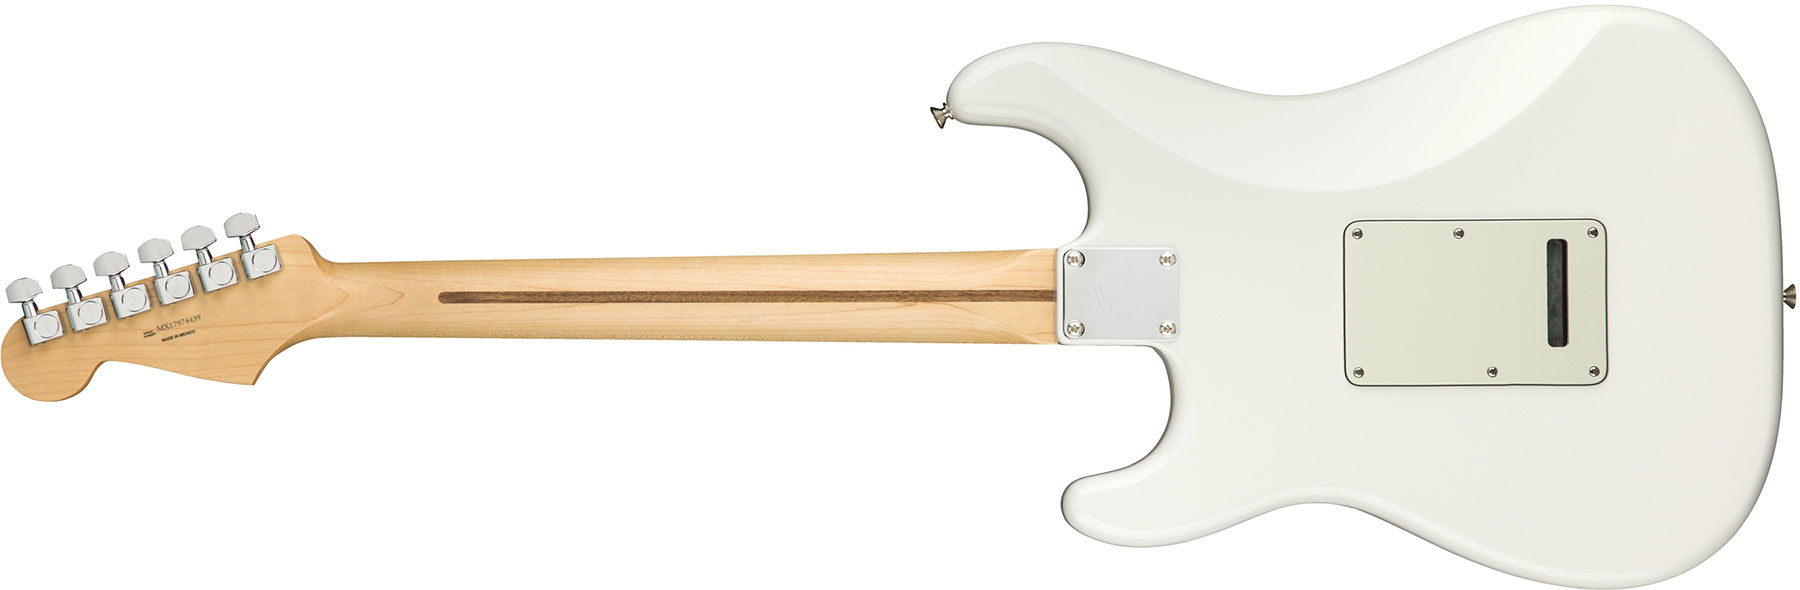 Fender Strat Player Mex Sss Pf - Polar White - Guitarra eléctrica con forma de str. - Variation 1